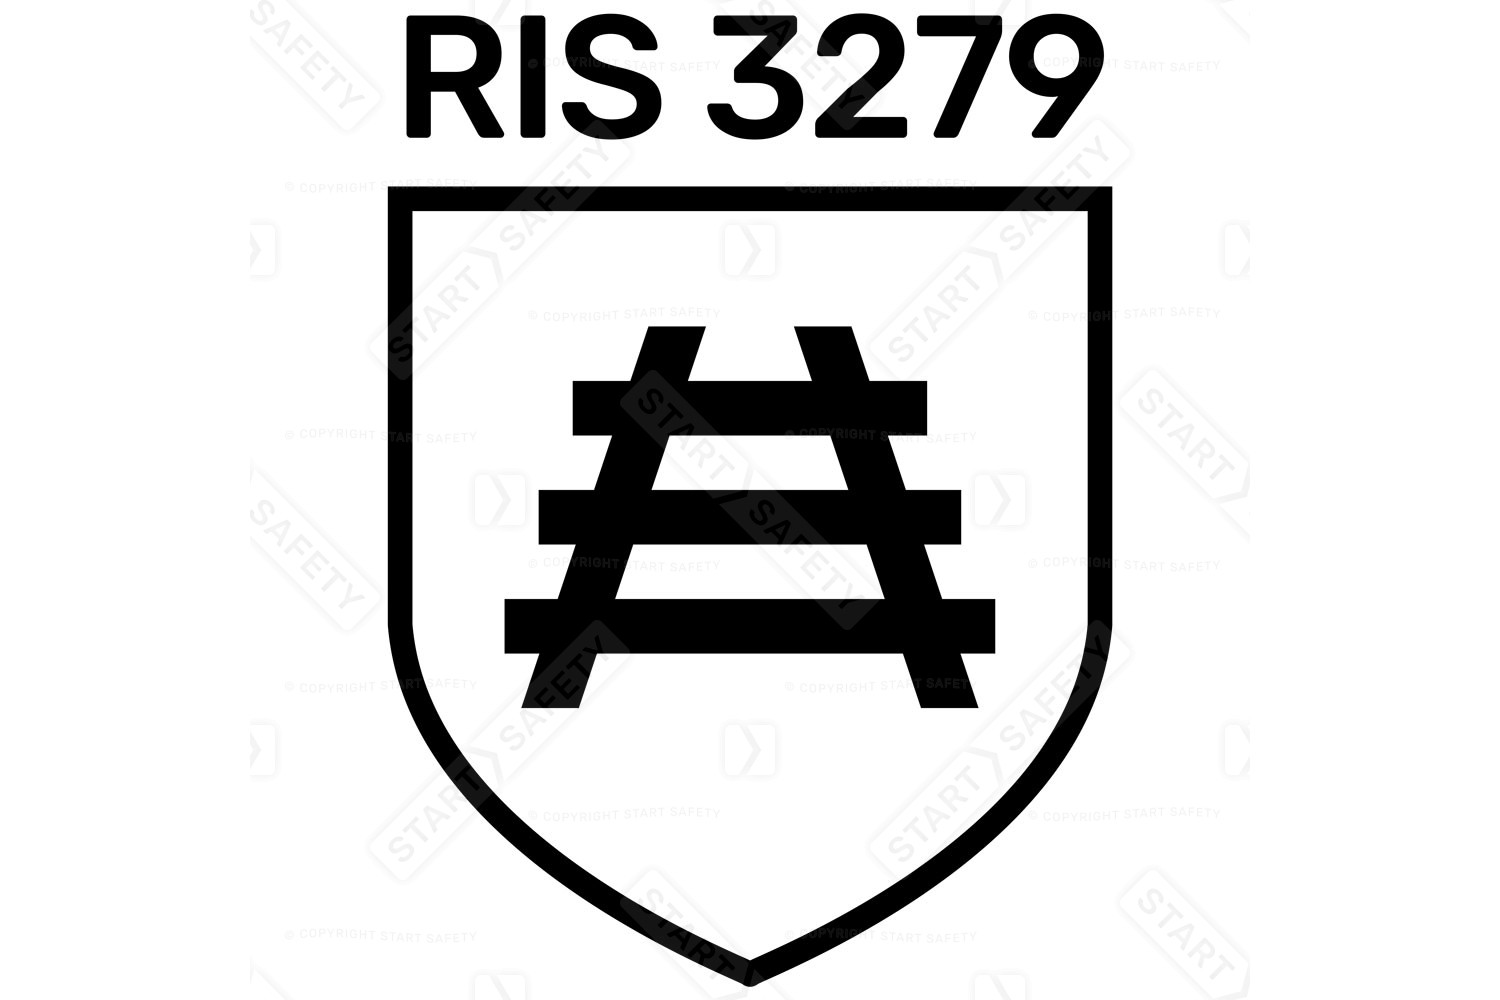 RIS-3279 Rail Working Standard For Workwear